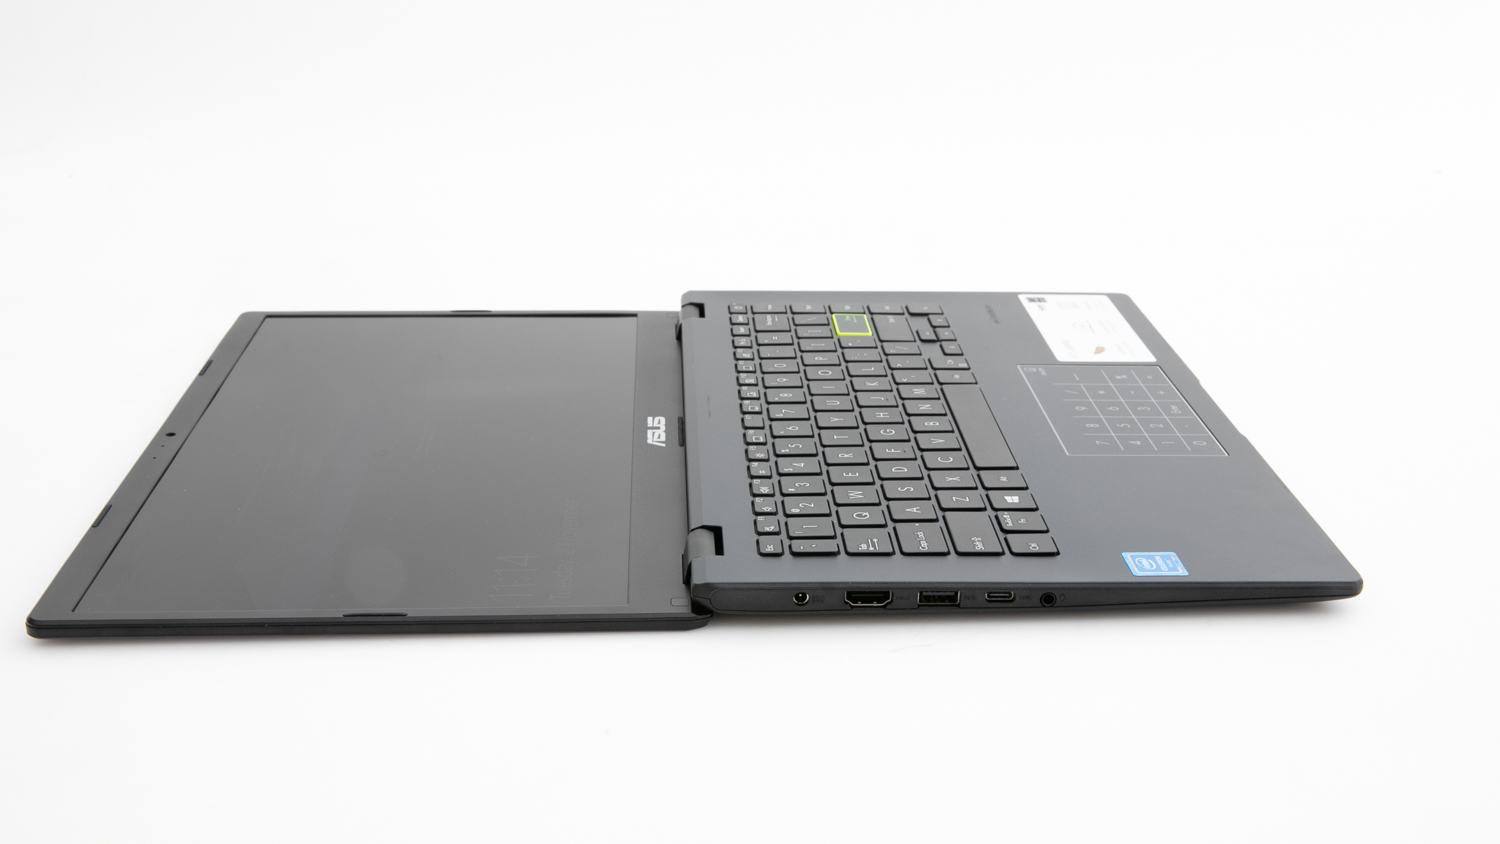 Asus E410m E410ma Ek005ts Review Laptop And Tablet Choice 2193